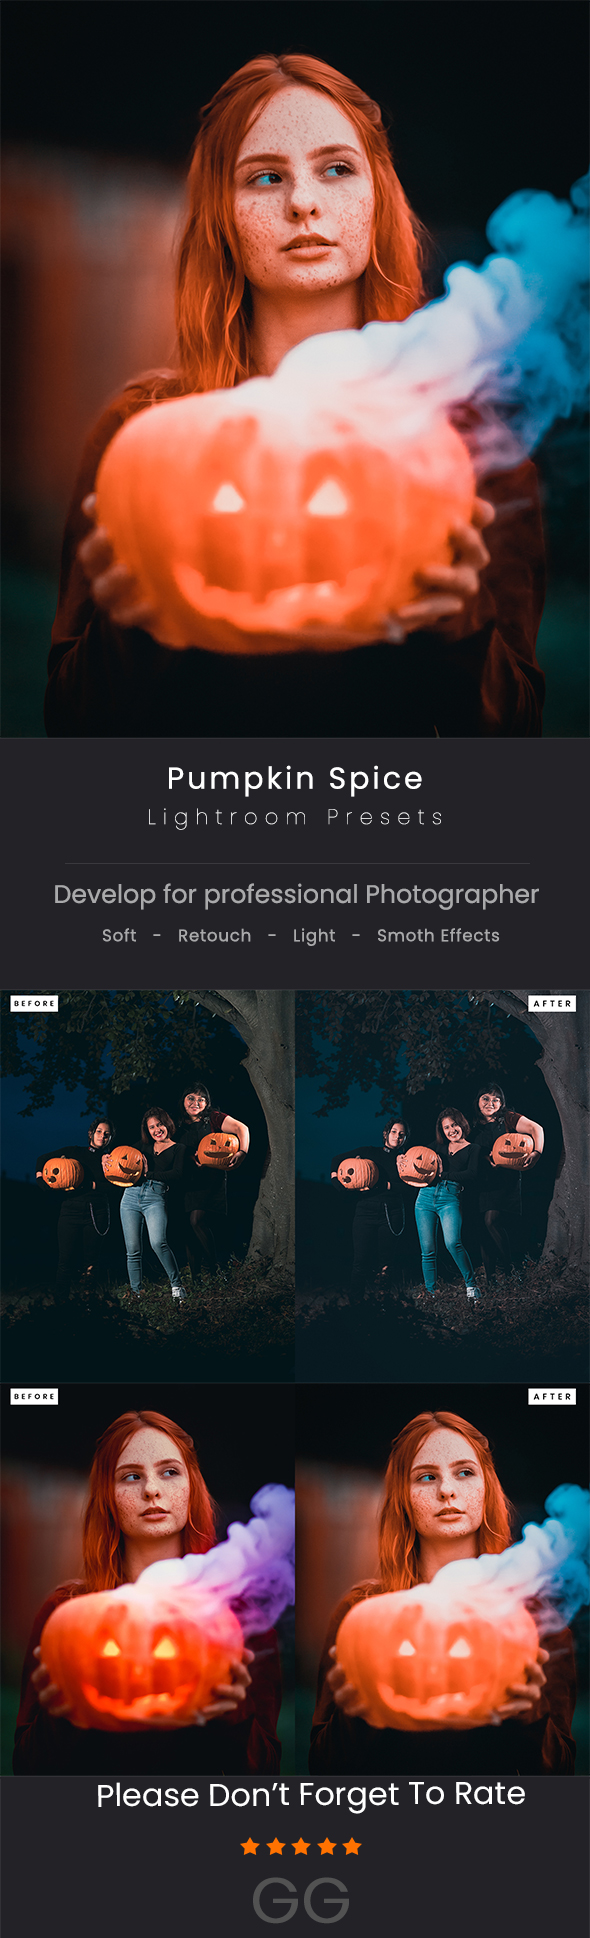 Pumpkin Spice Lightroom Presets